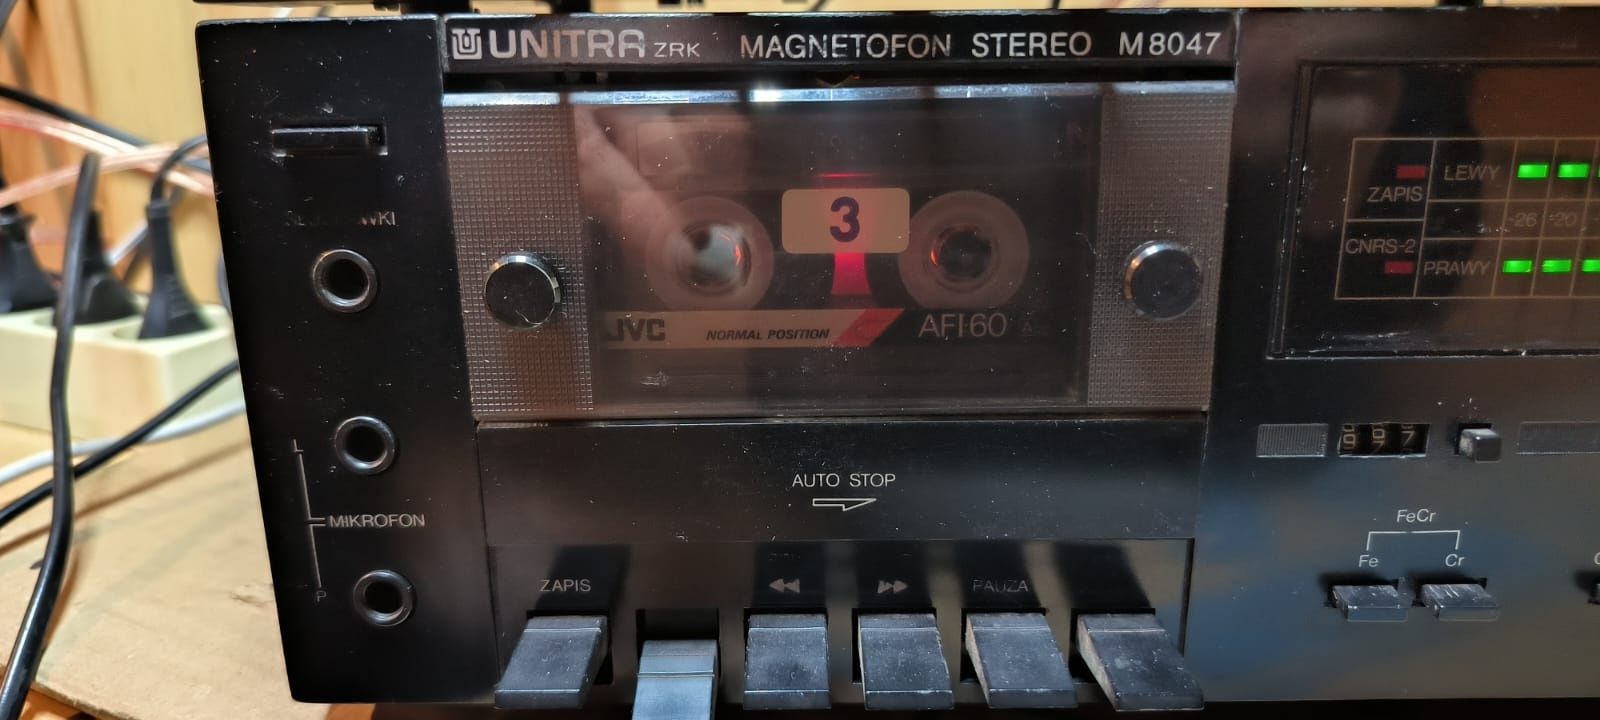 Magnetofon Unitra M8047 i Amplituner Unitra R8040